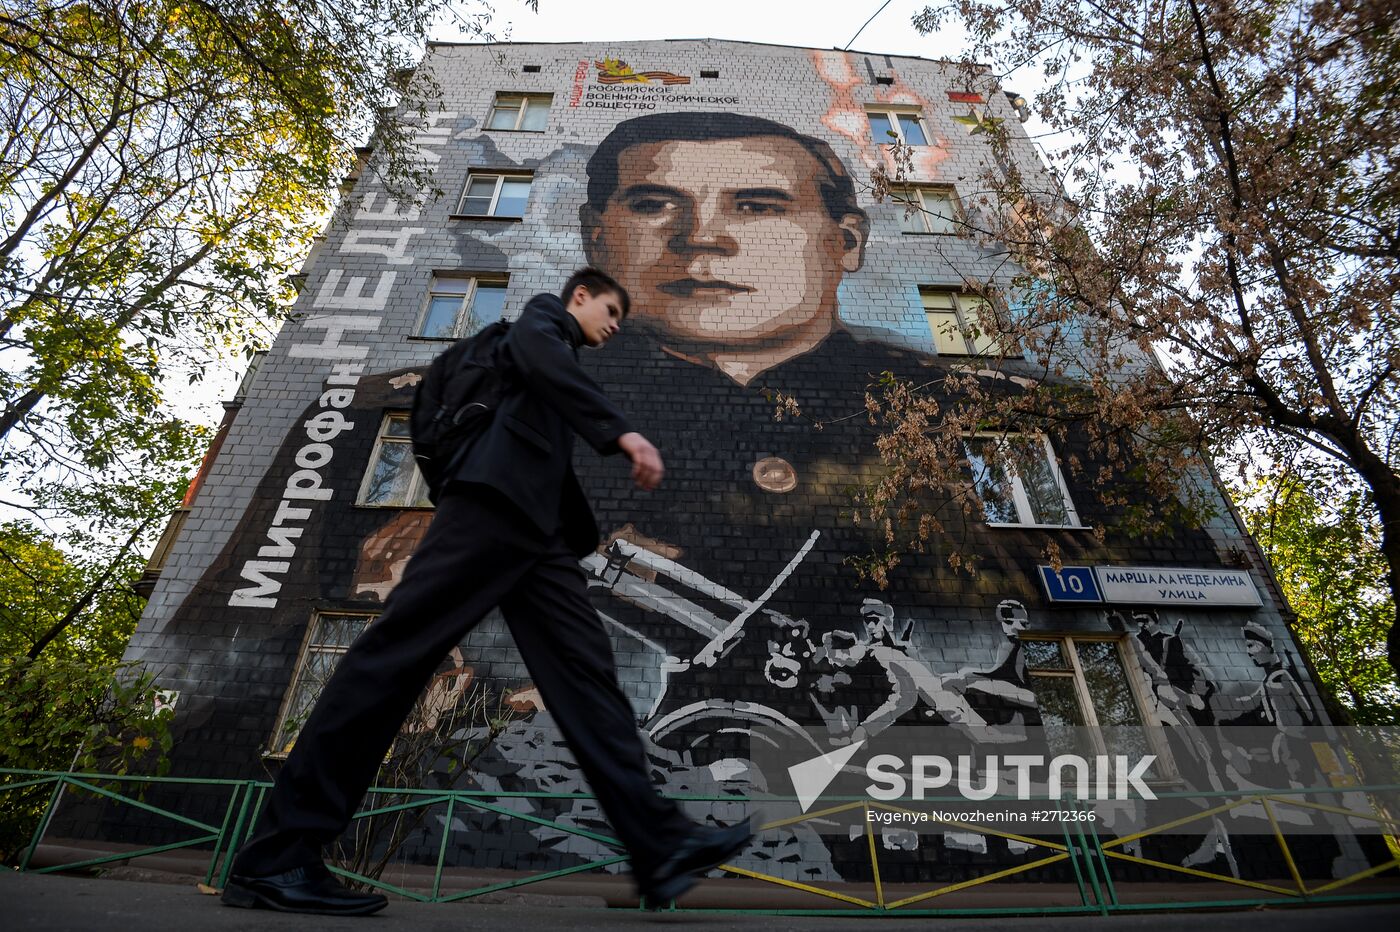 Graffiti art project depicting heroes of Great Patriotic War